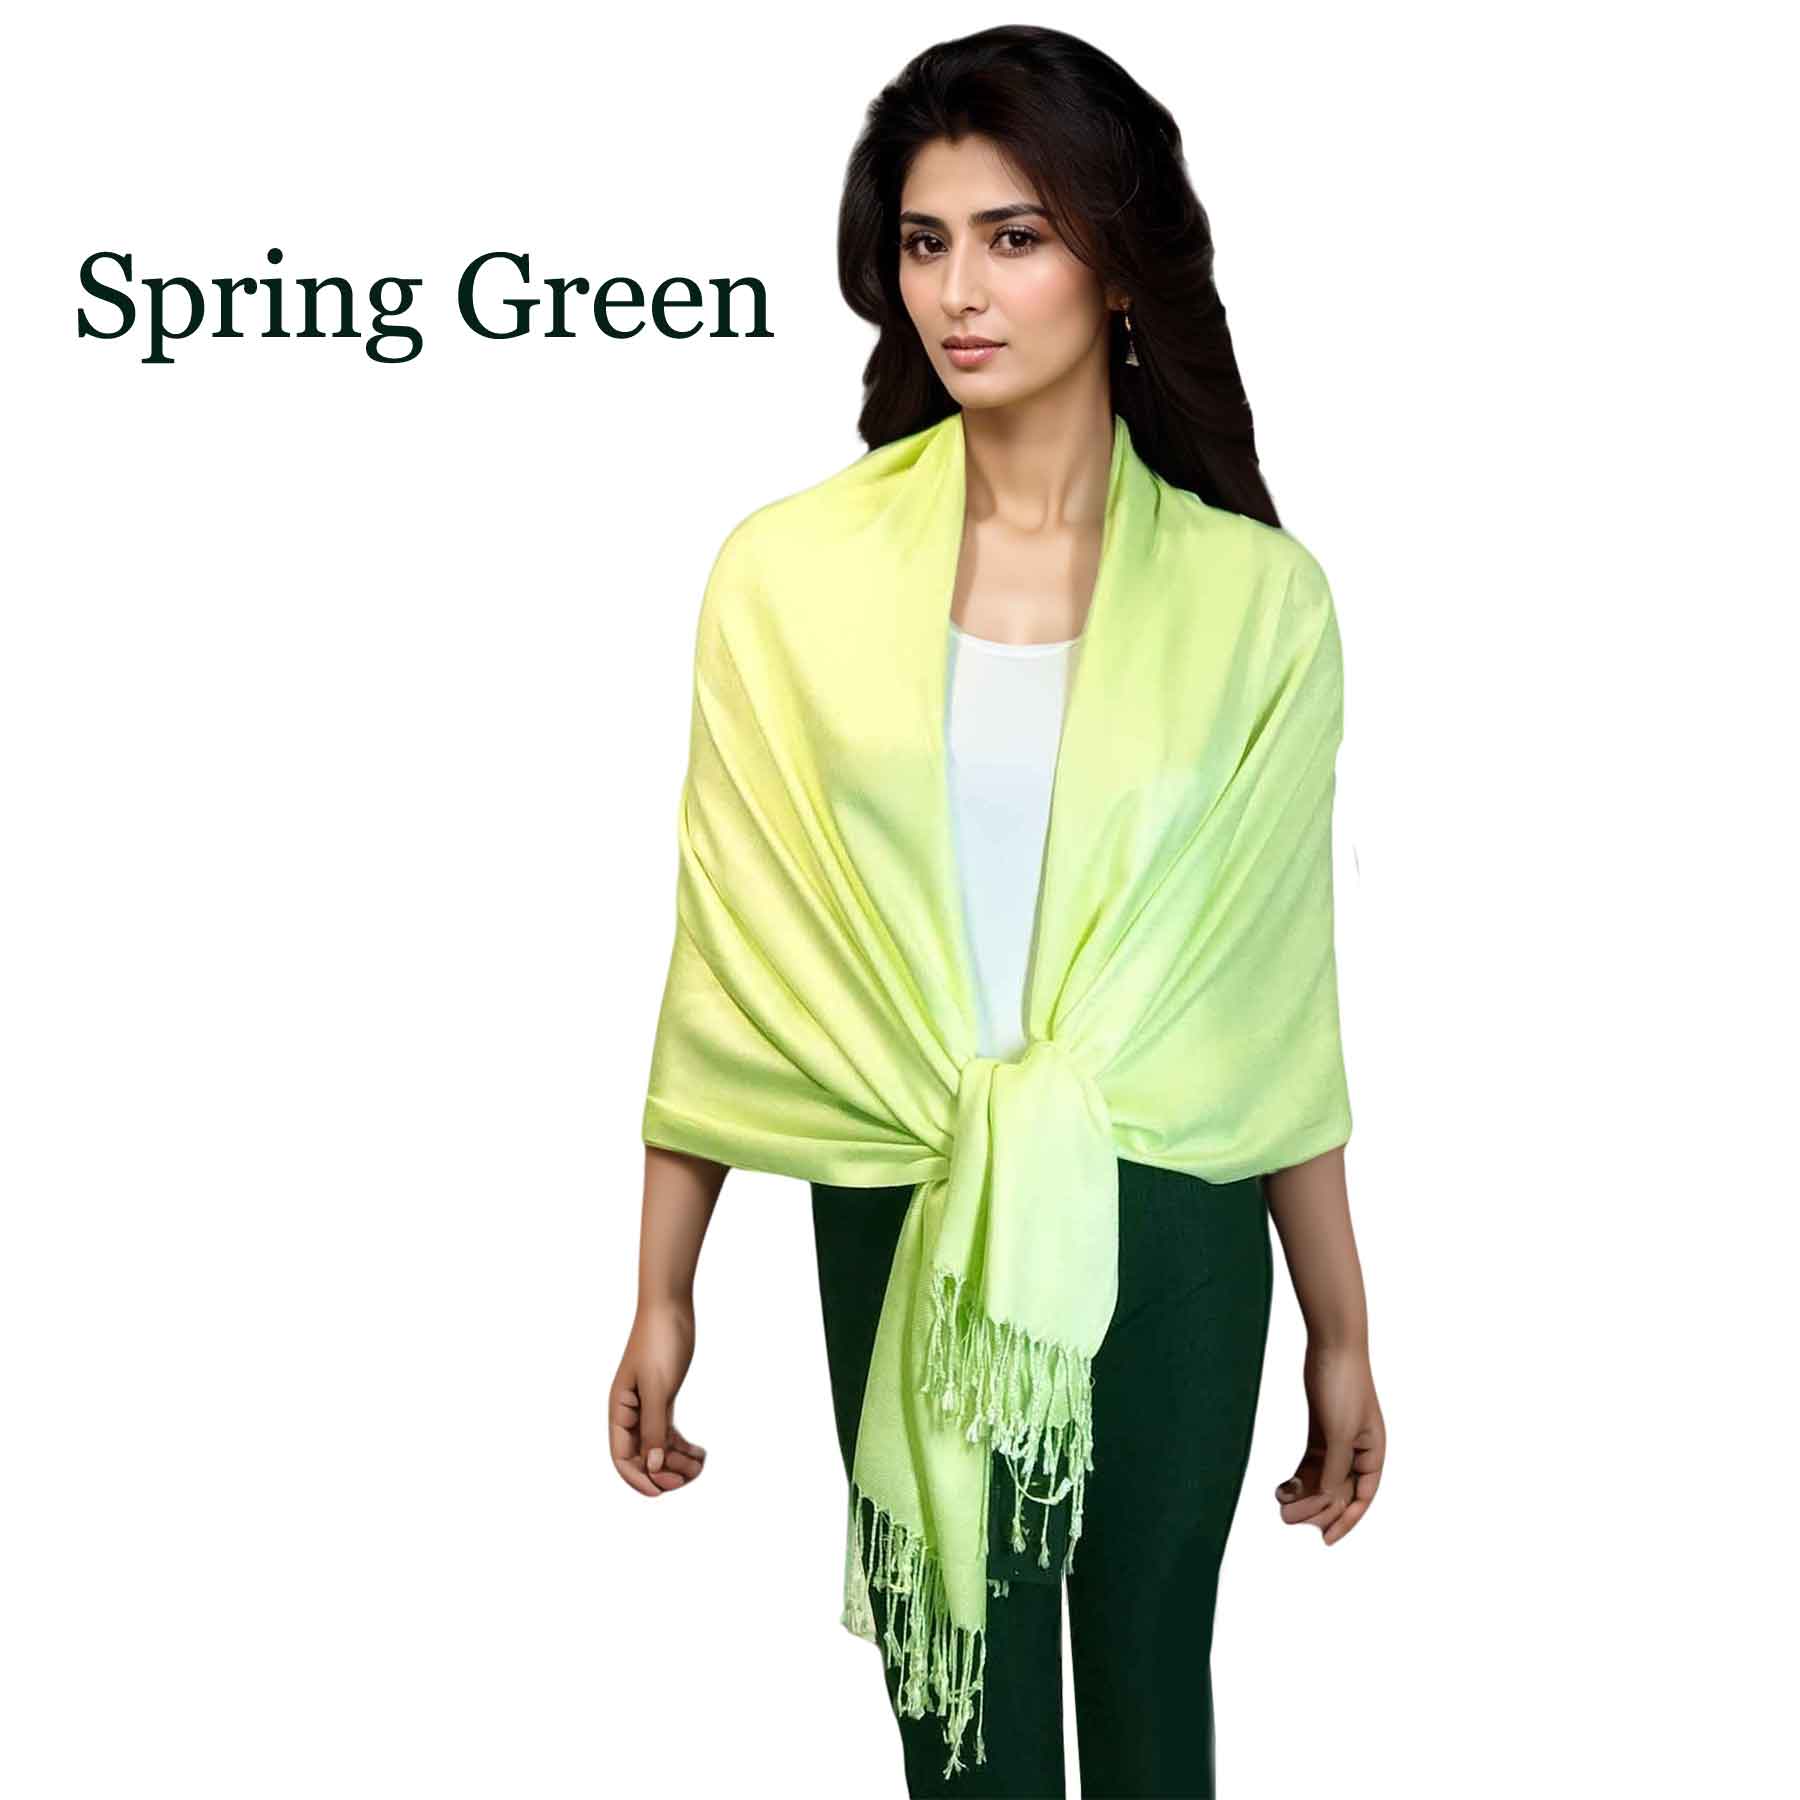 Spring Green #09<br>
Pashmina Style Shawl